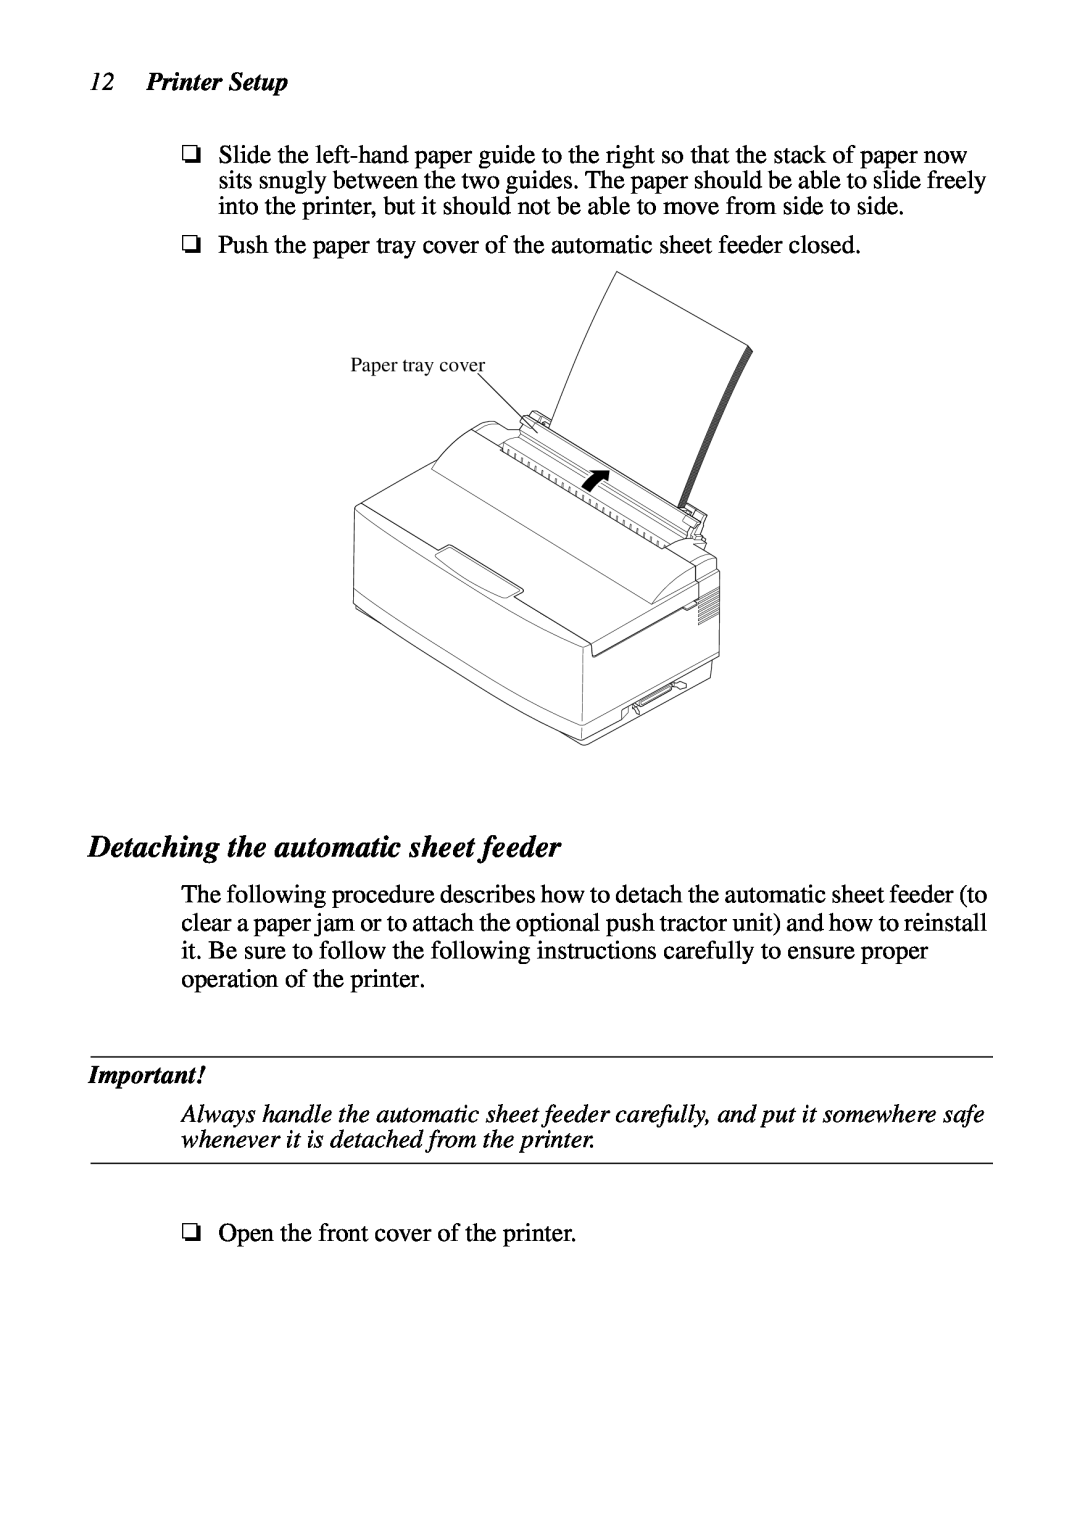 Star Micronics NX-2460C user manual Detaching the automatic sheet feeder, Printer Setup 